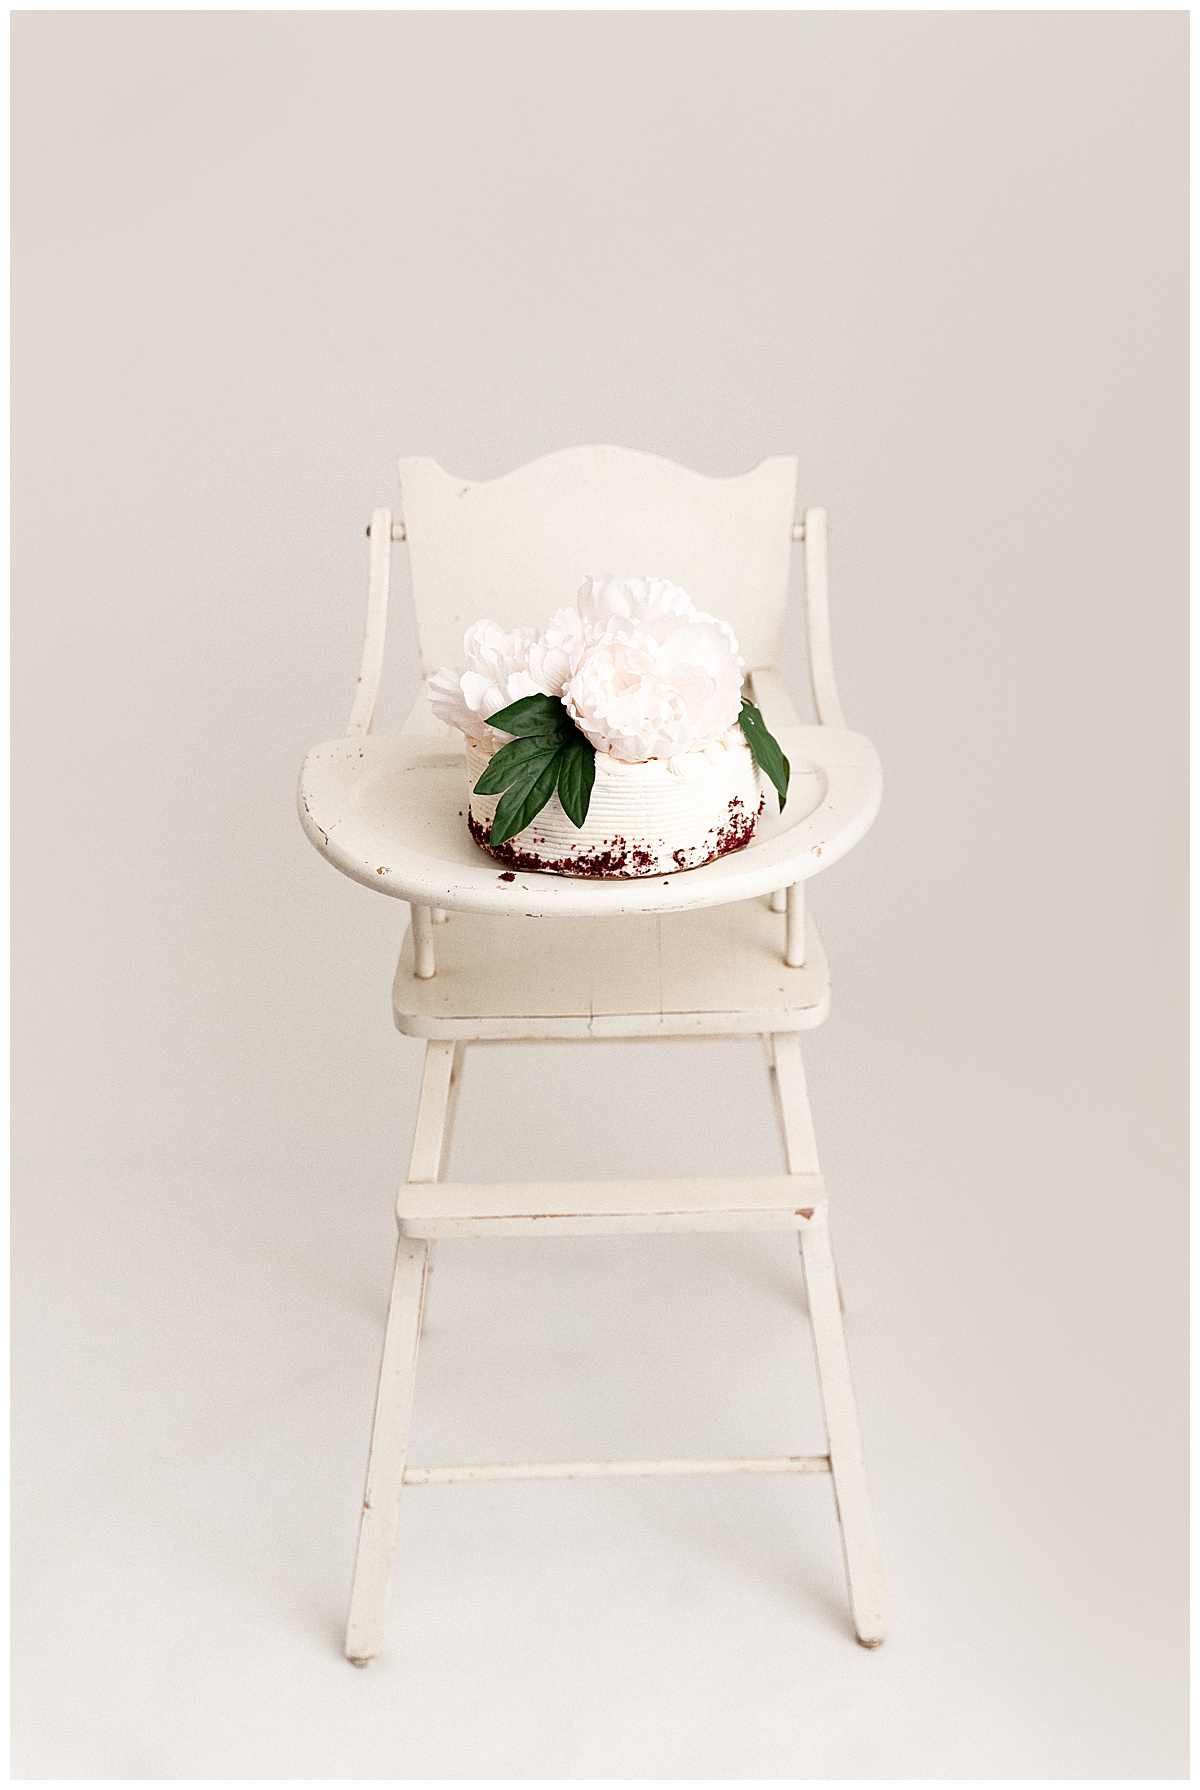 Smash cake sitting in high chair for Washington DC Baby Photographer